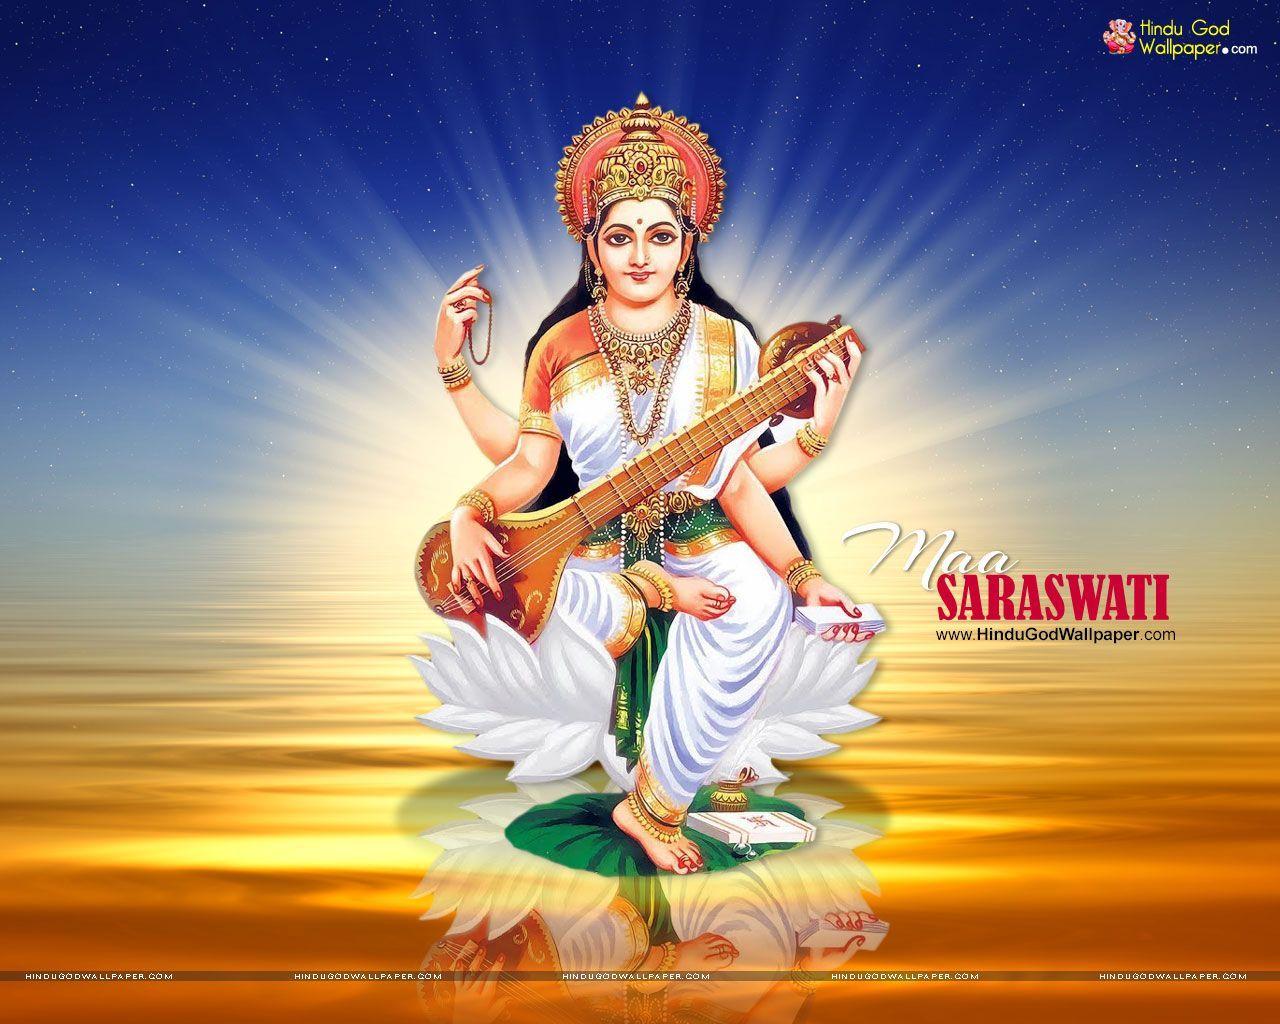 Beautiful Saraswati Wallpaper & Photo Free Download. Free